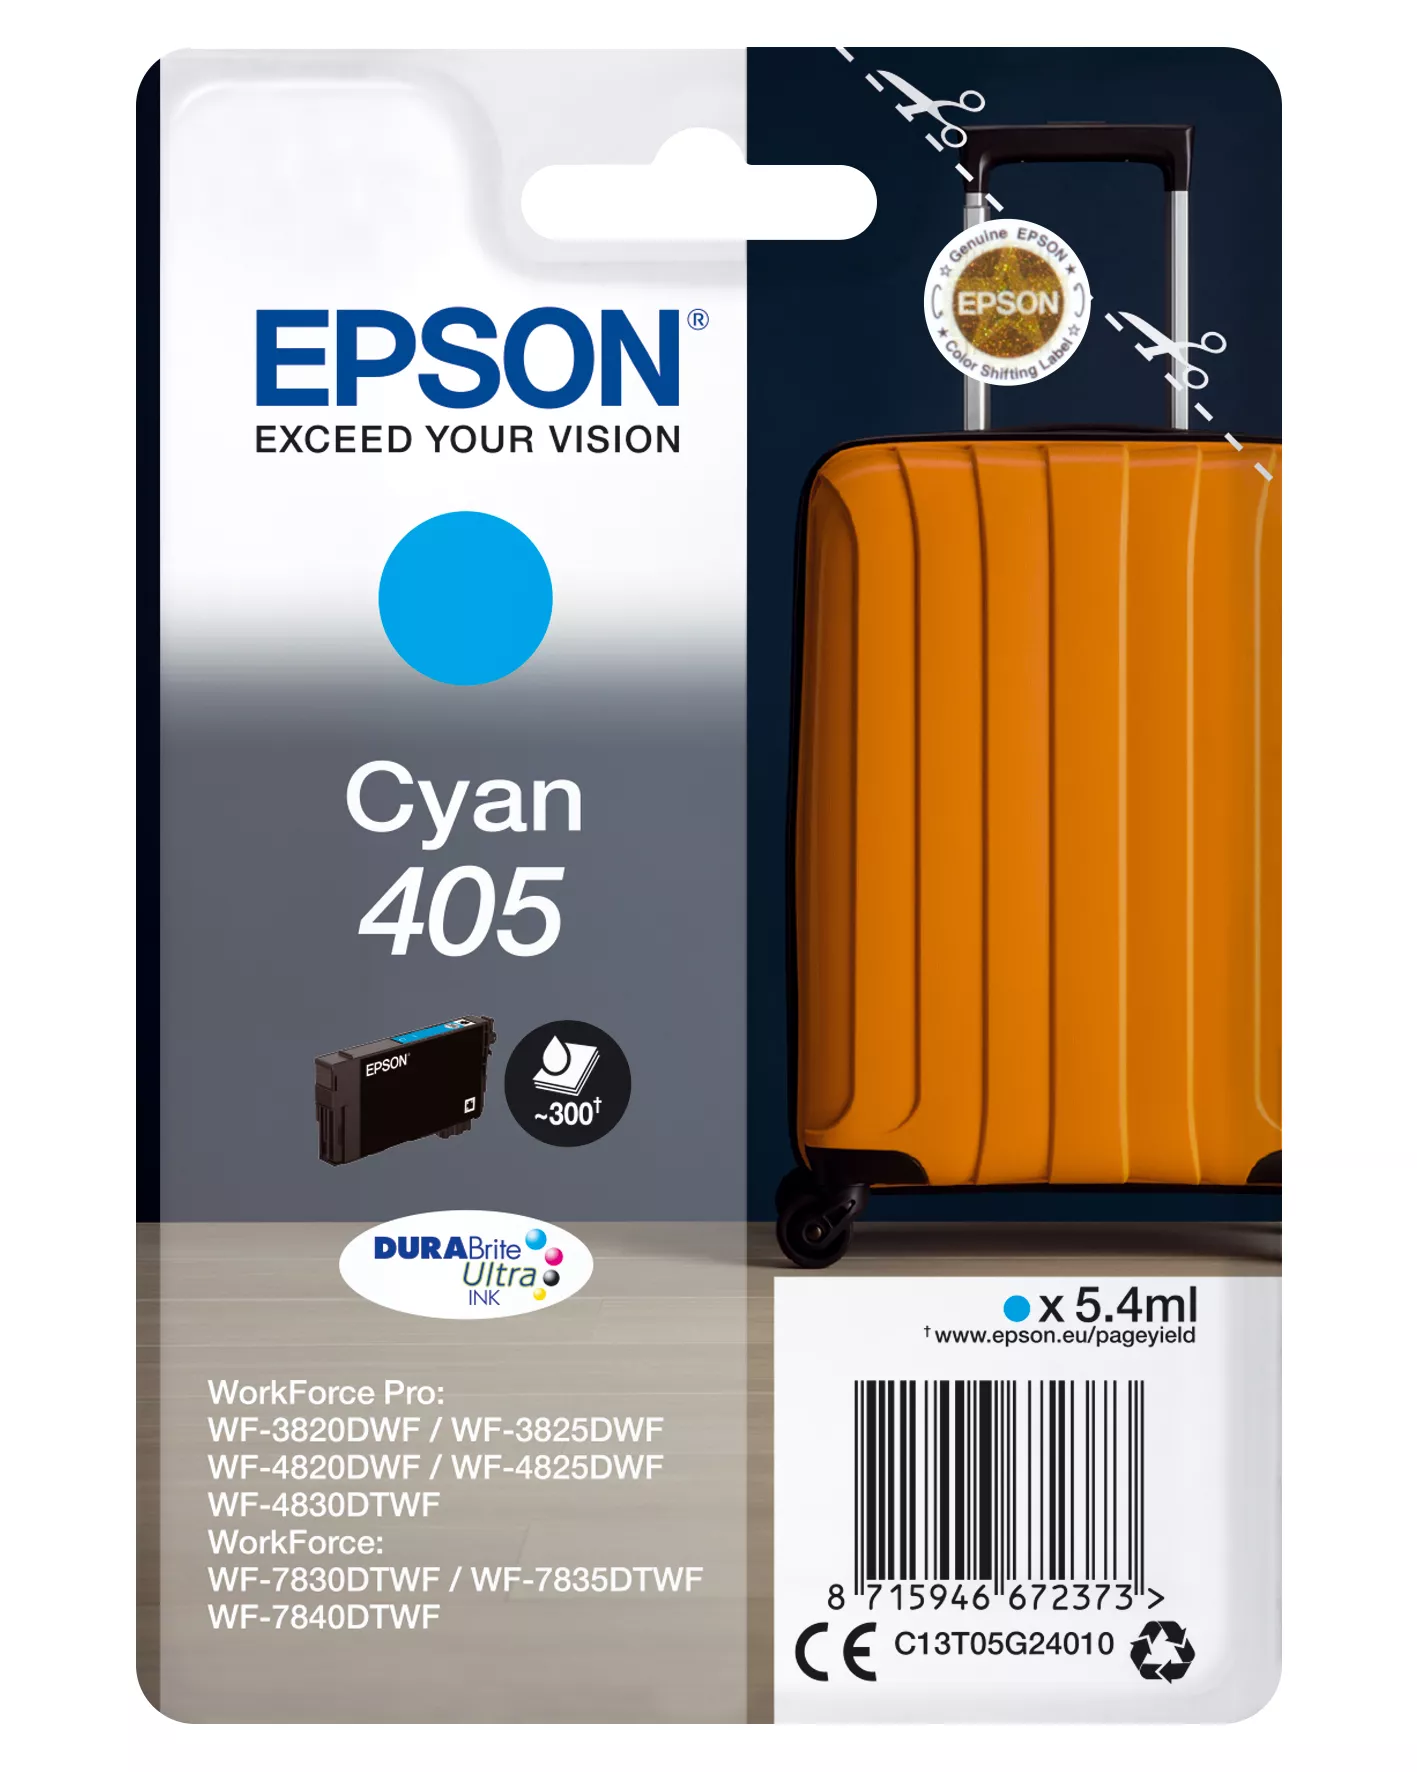 Vente Cartouches d'encre EPSON Singlepack Cyan 405 DURABrite Ultra Ink